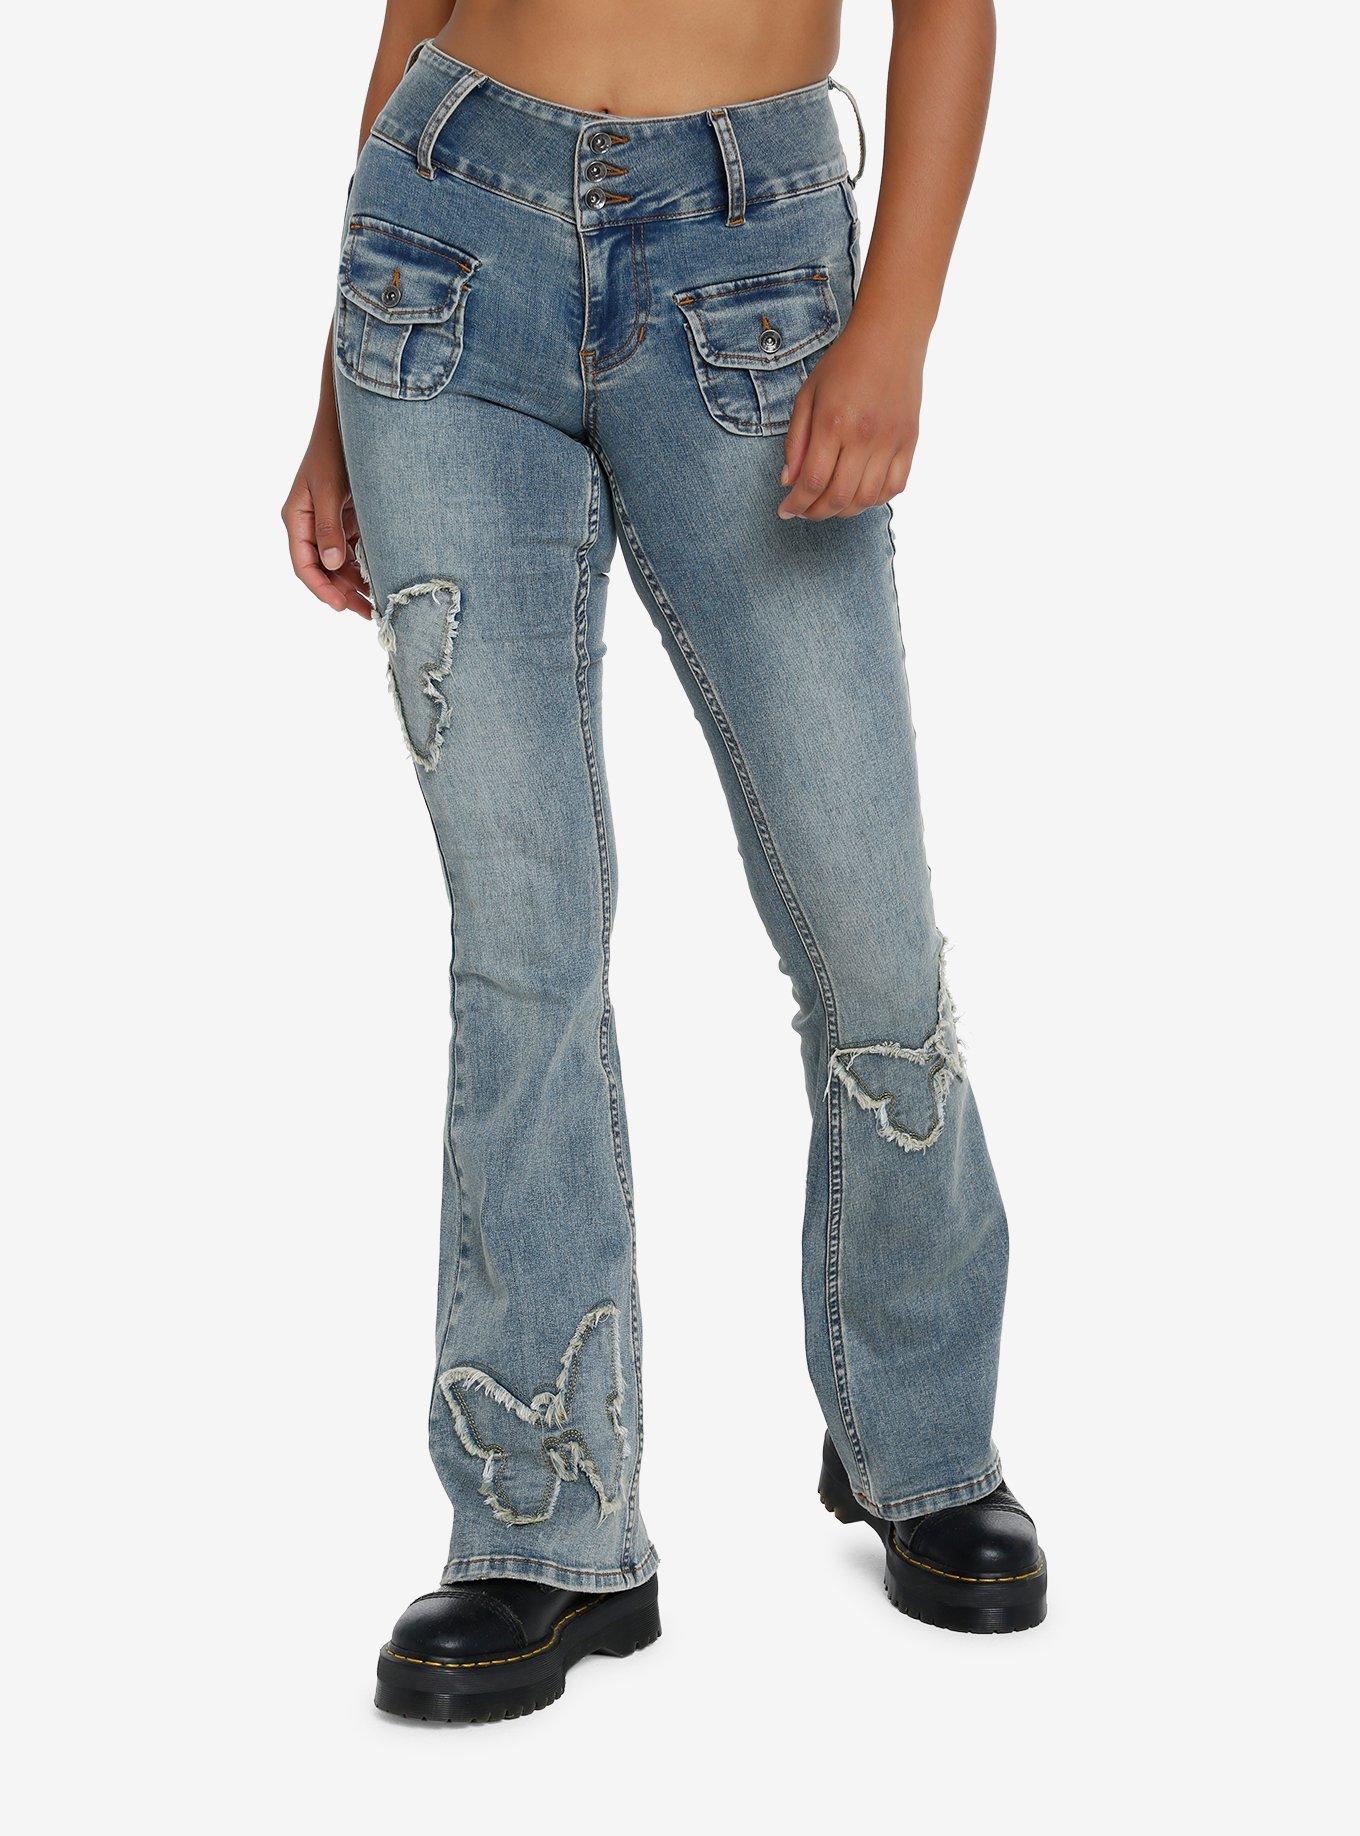 JACK DAVID Women's Plus Size Stretch BlackBlue Denim Jeans Pants